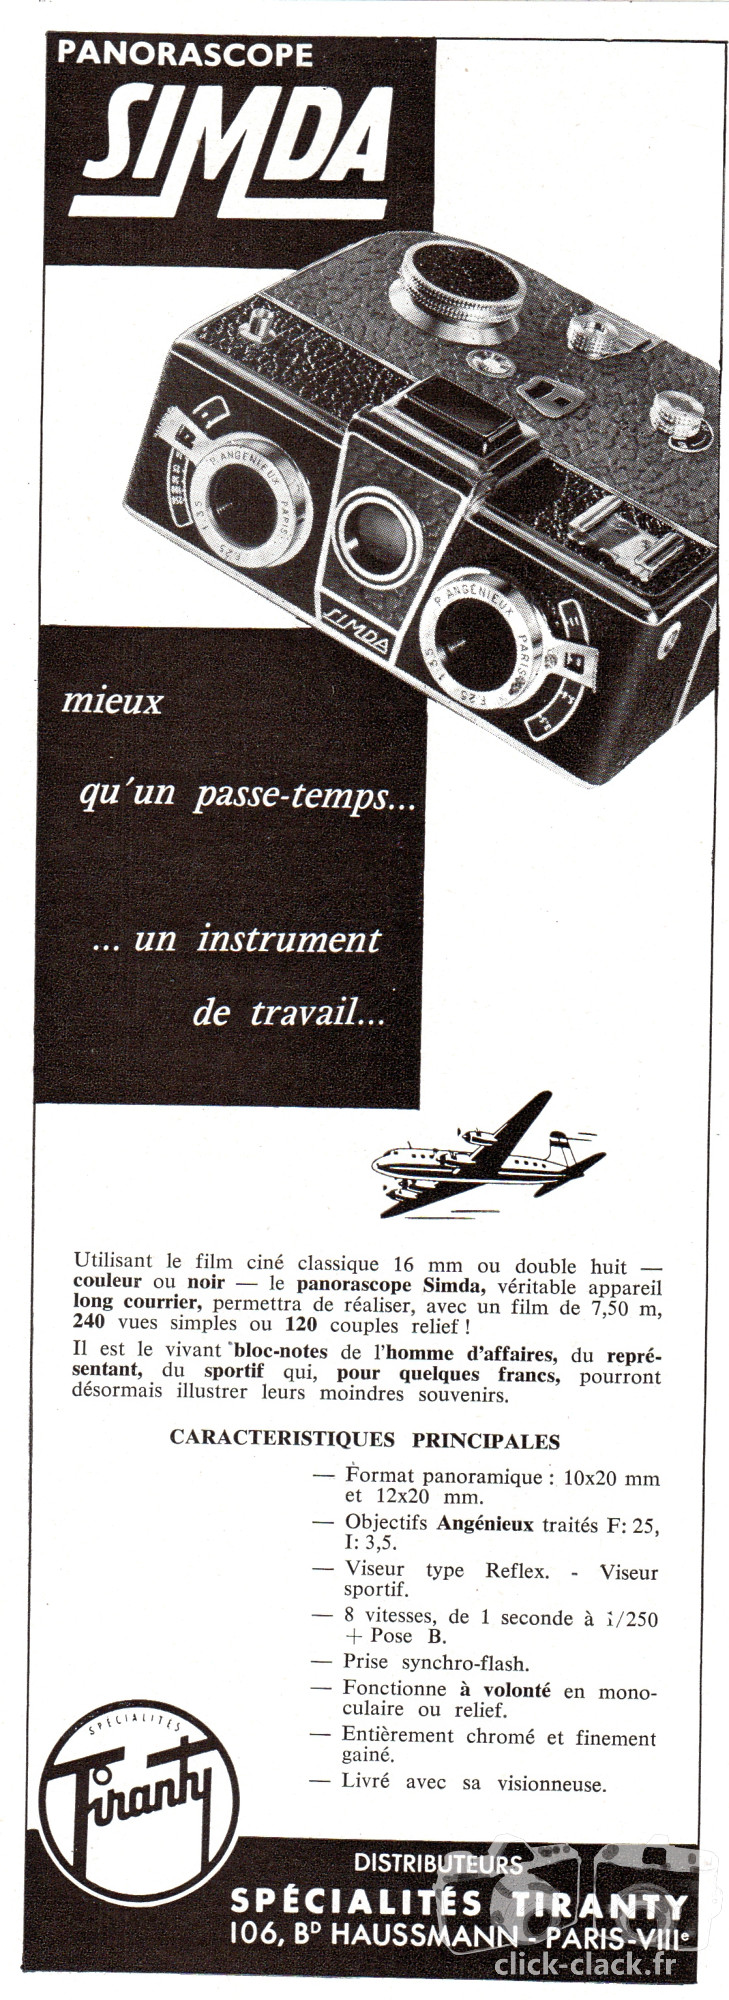 SIMDA - Panorascope - novembre 1958 - Photo-Cinéma